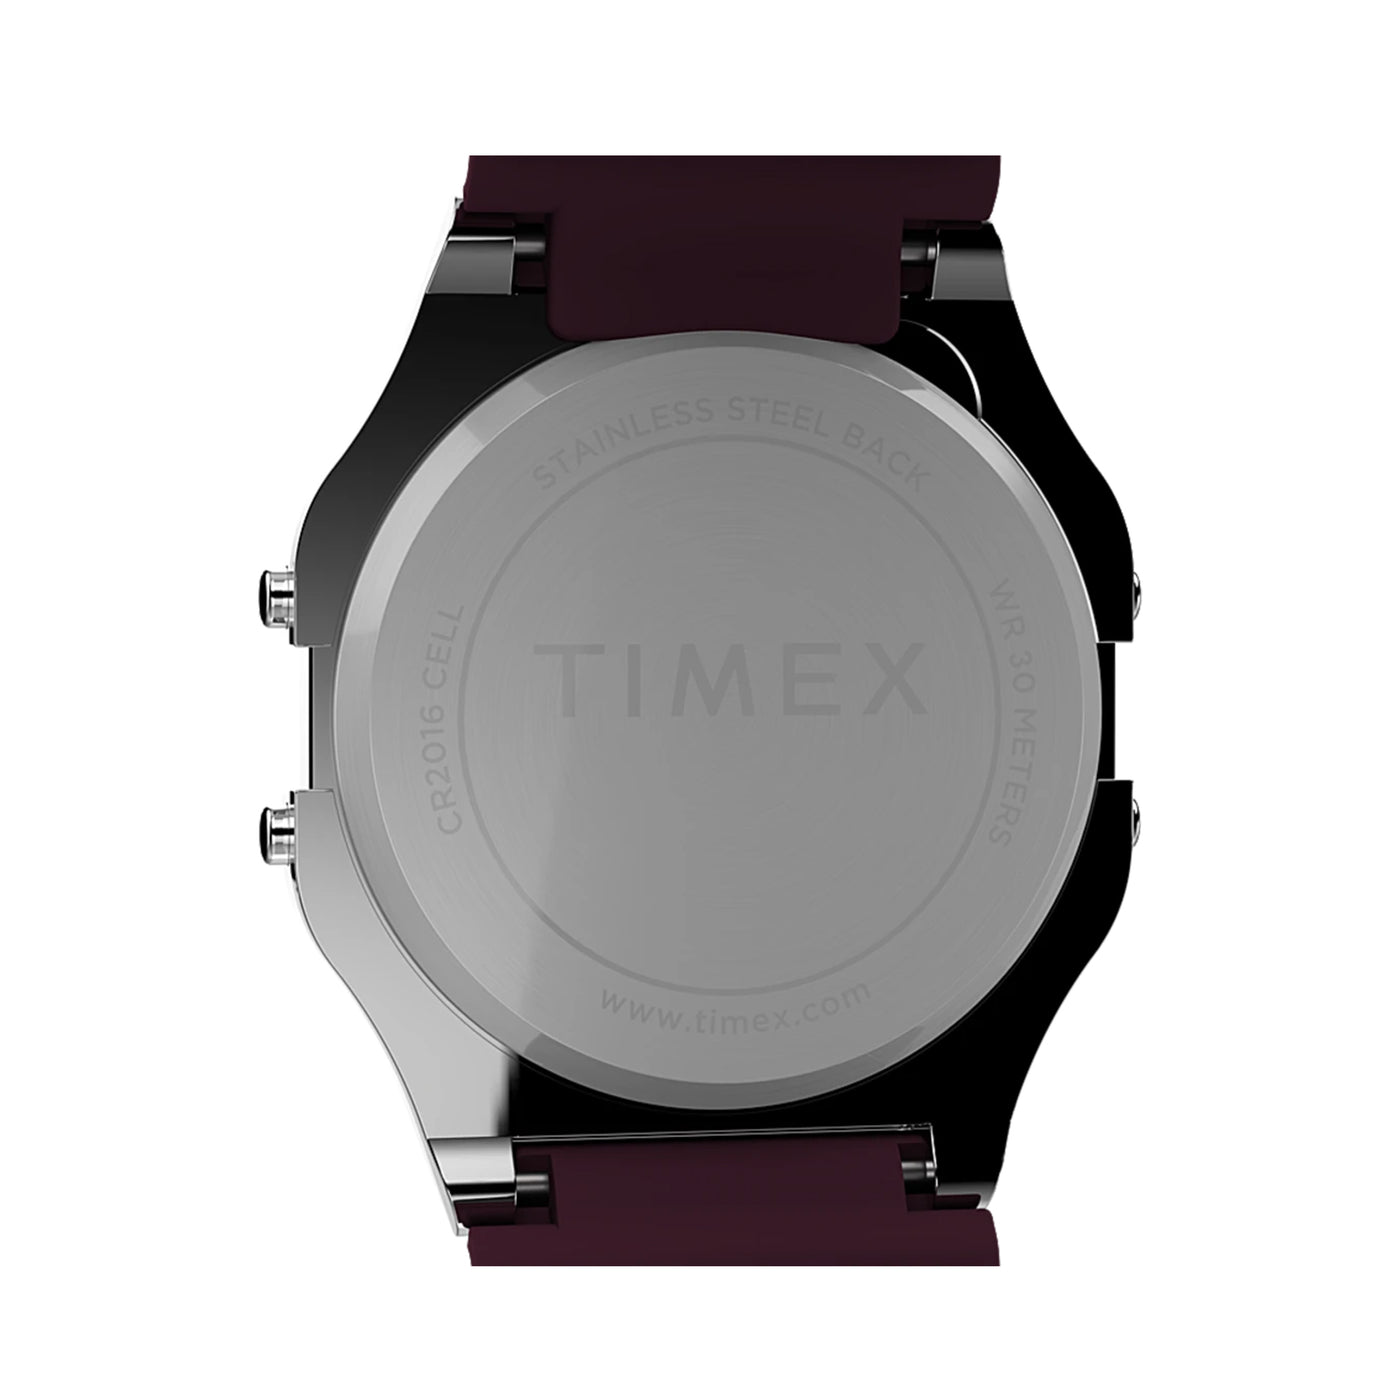 Timex T80 Digital 34mm Resin Band